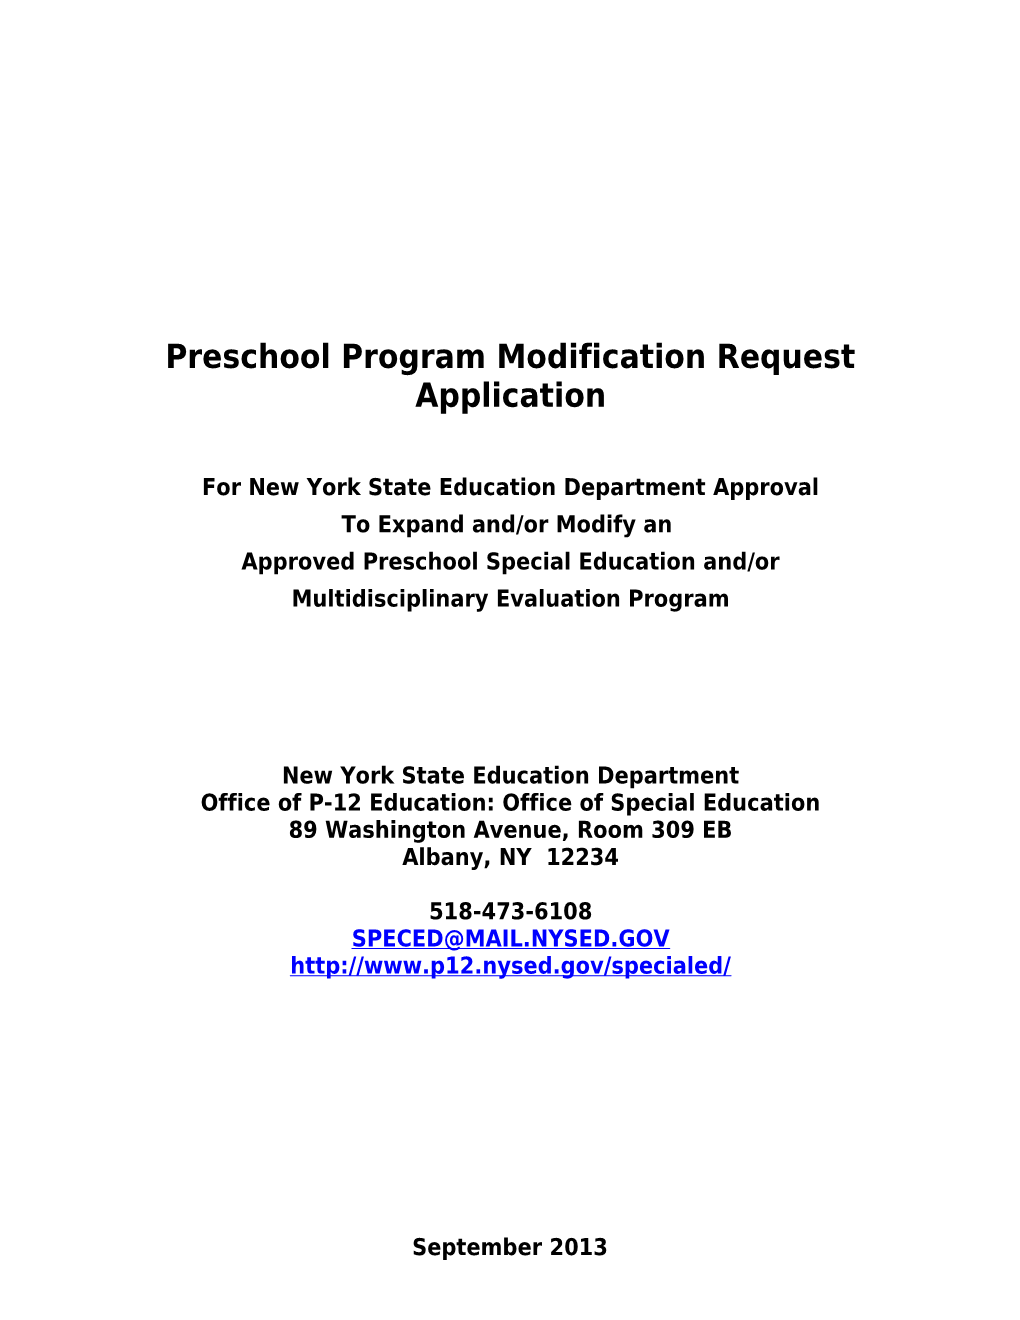 Preschool Program Modification Request Application